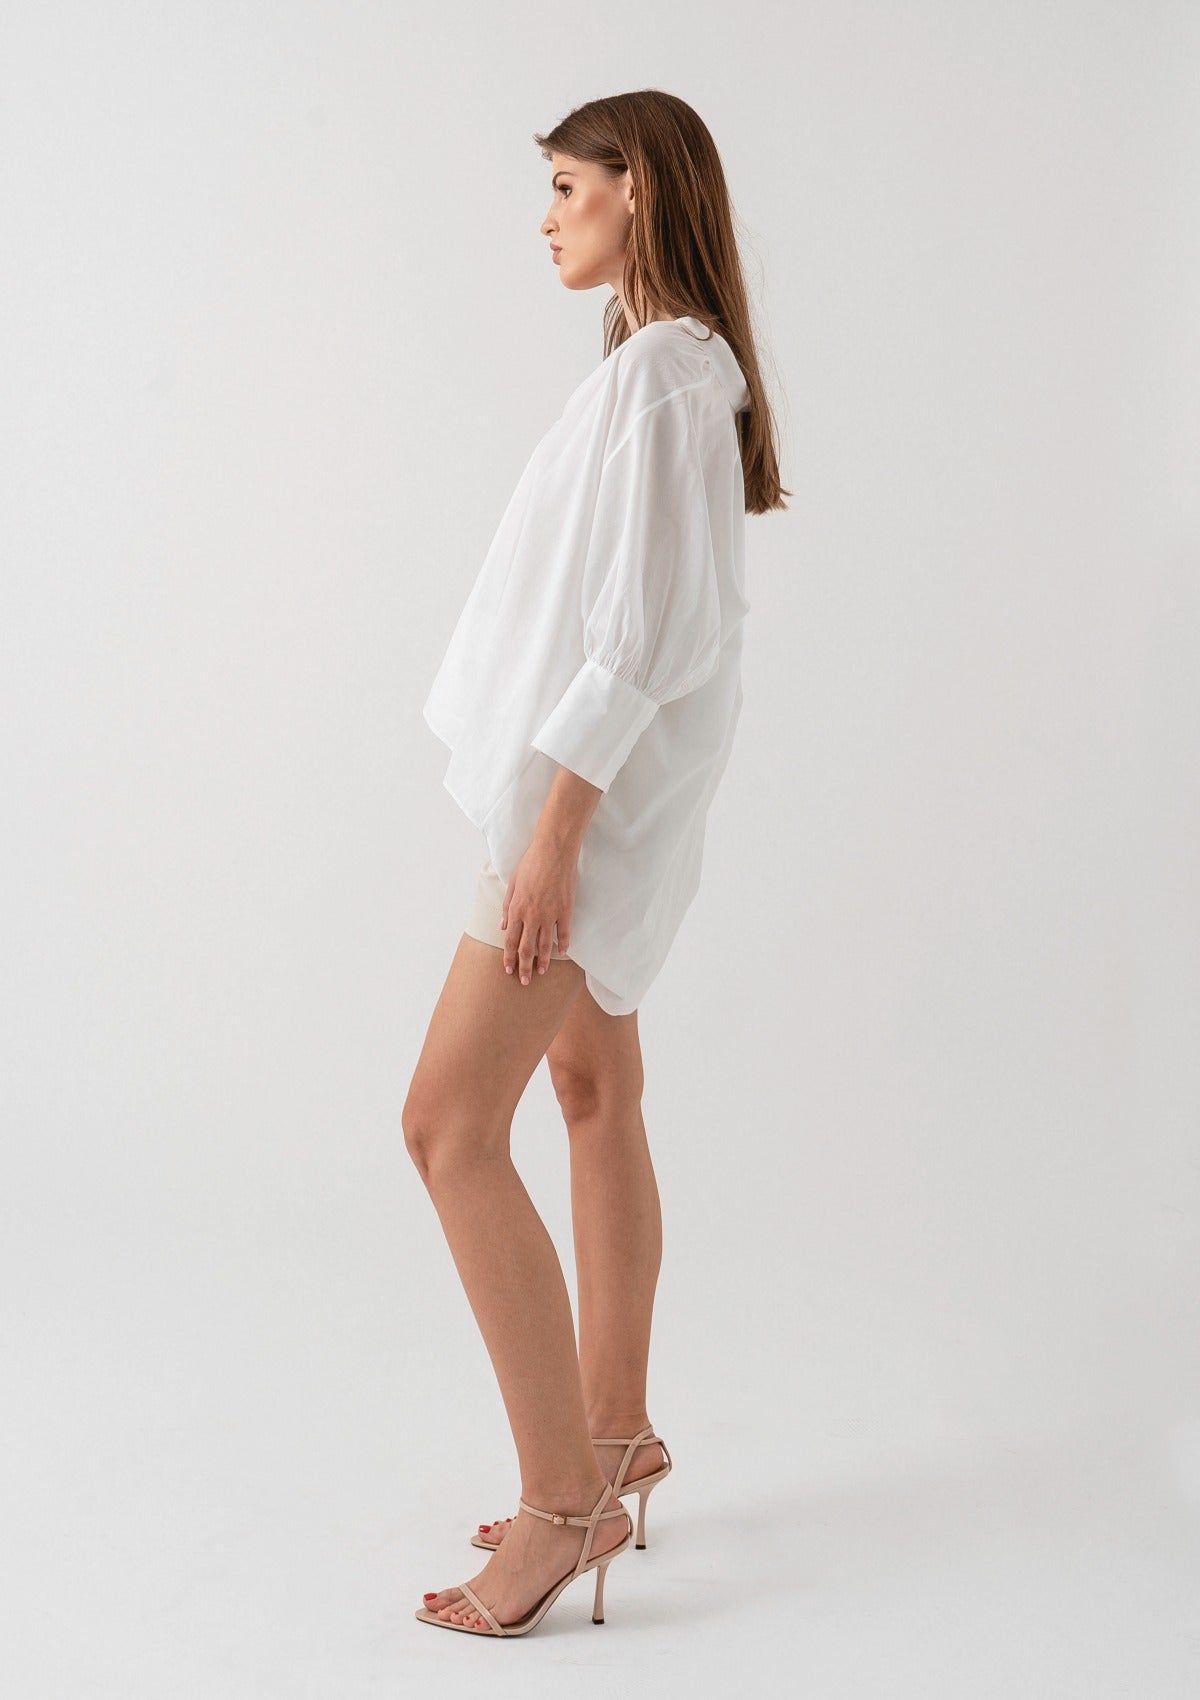 white-lightweight-cotton-shortsleeved-shirt-by Silk & tonic